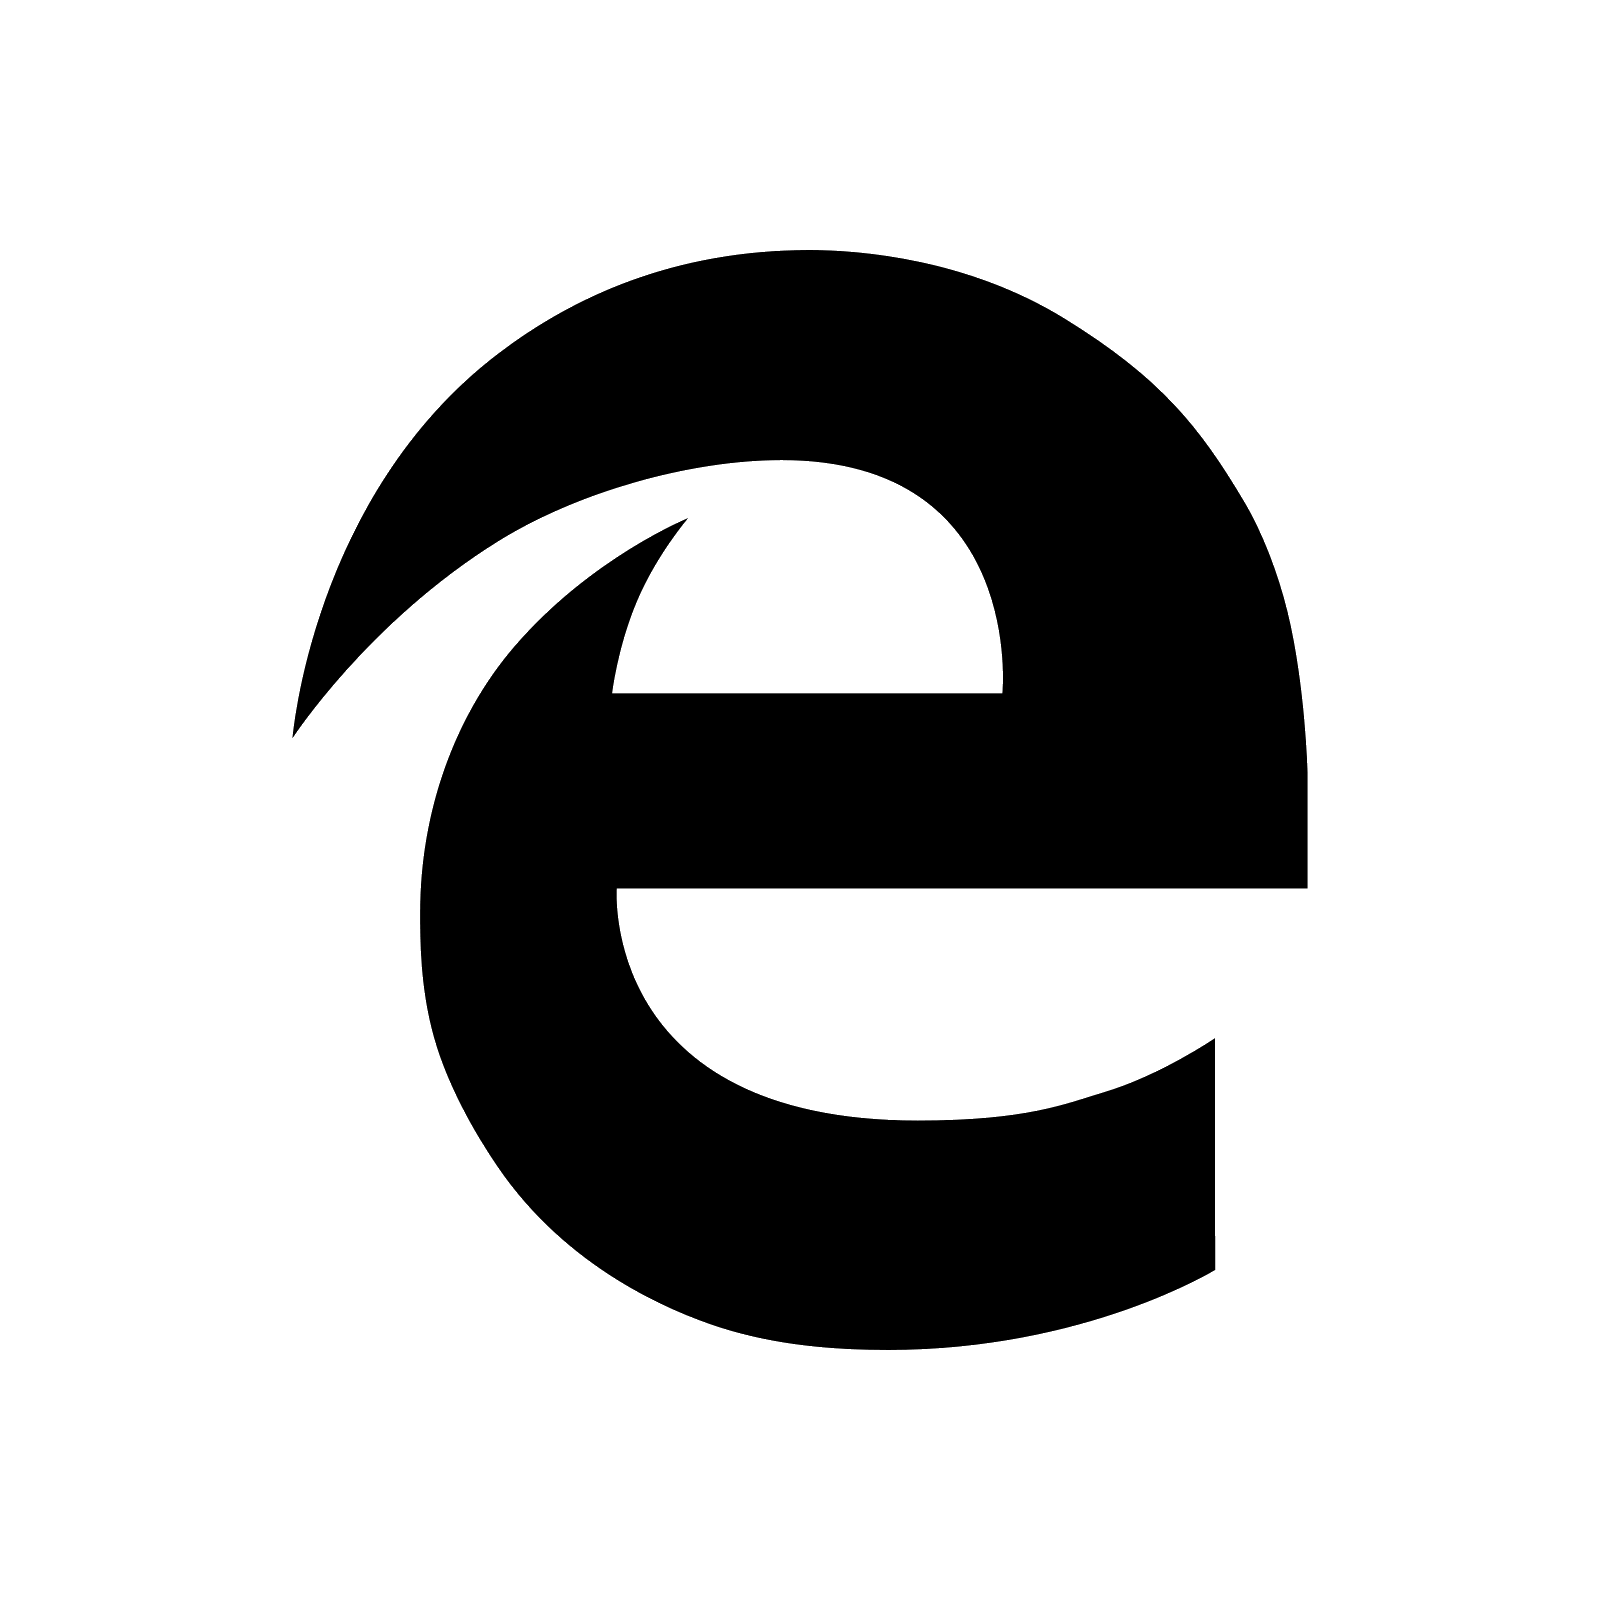 Microsoft Edge Logo - Free Microsoft Edge Icon Png 298795. Download Microsoft Edge Icon